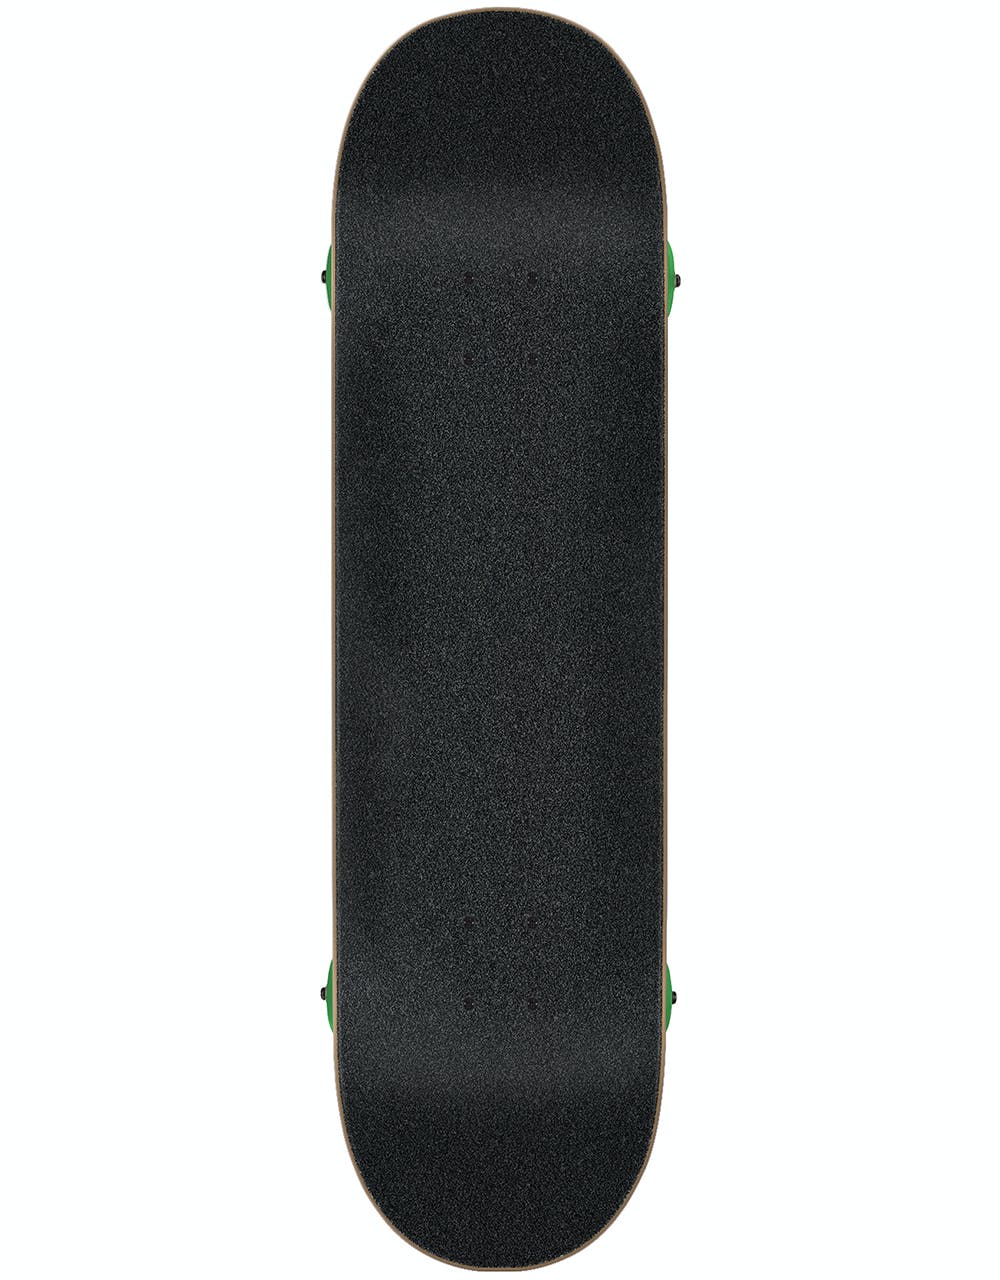 Santa Cruz Glow Dot Complete Skateboard - 7.25"